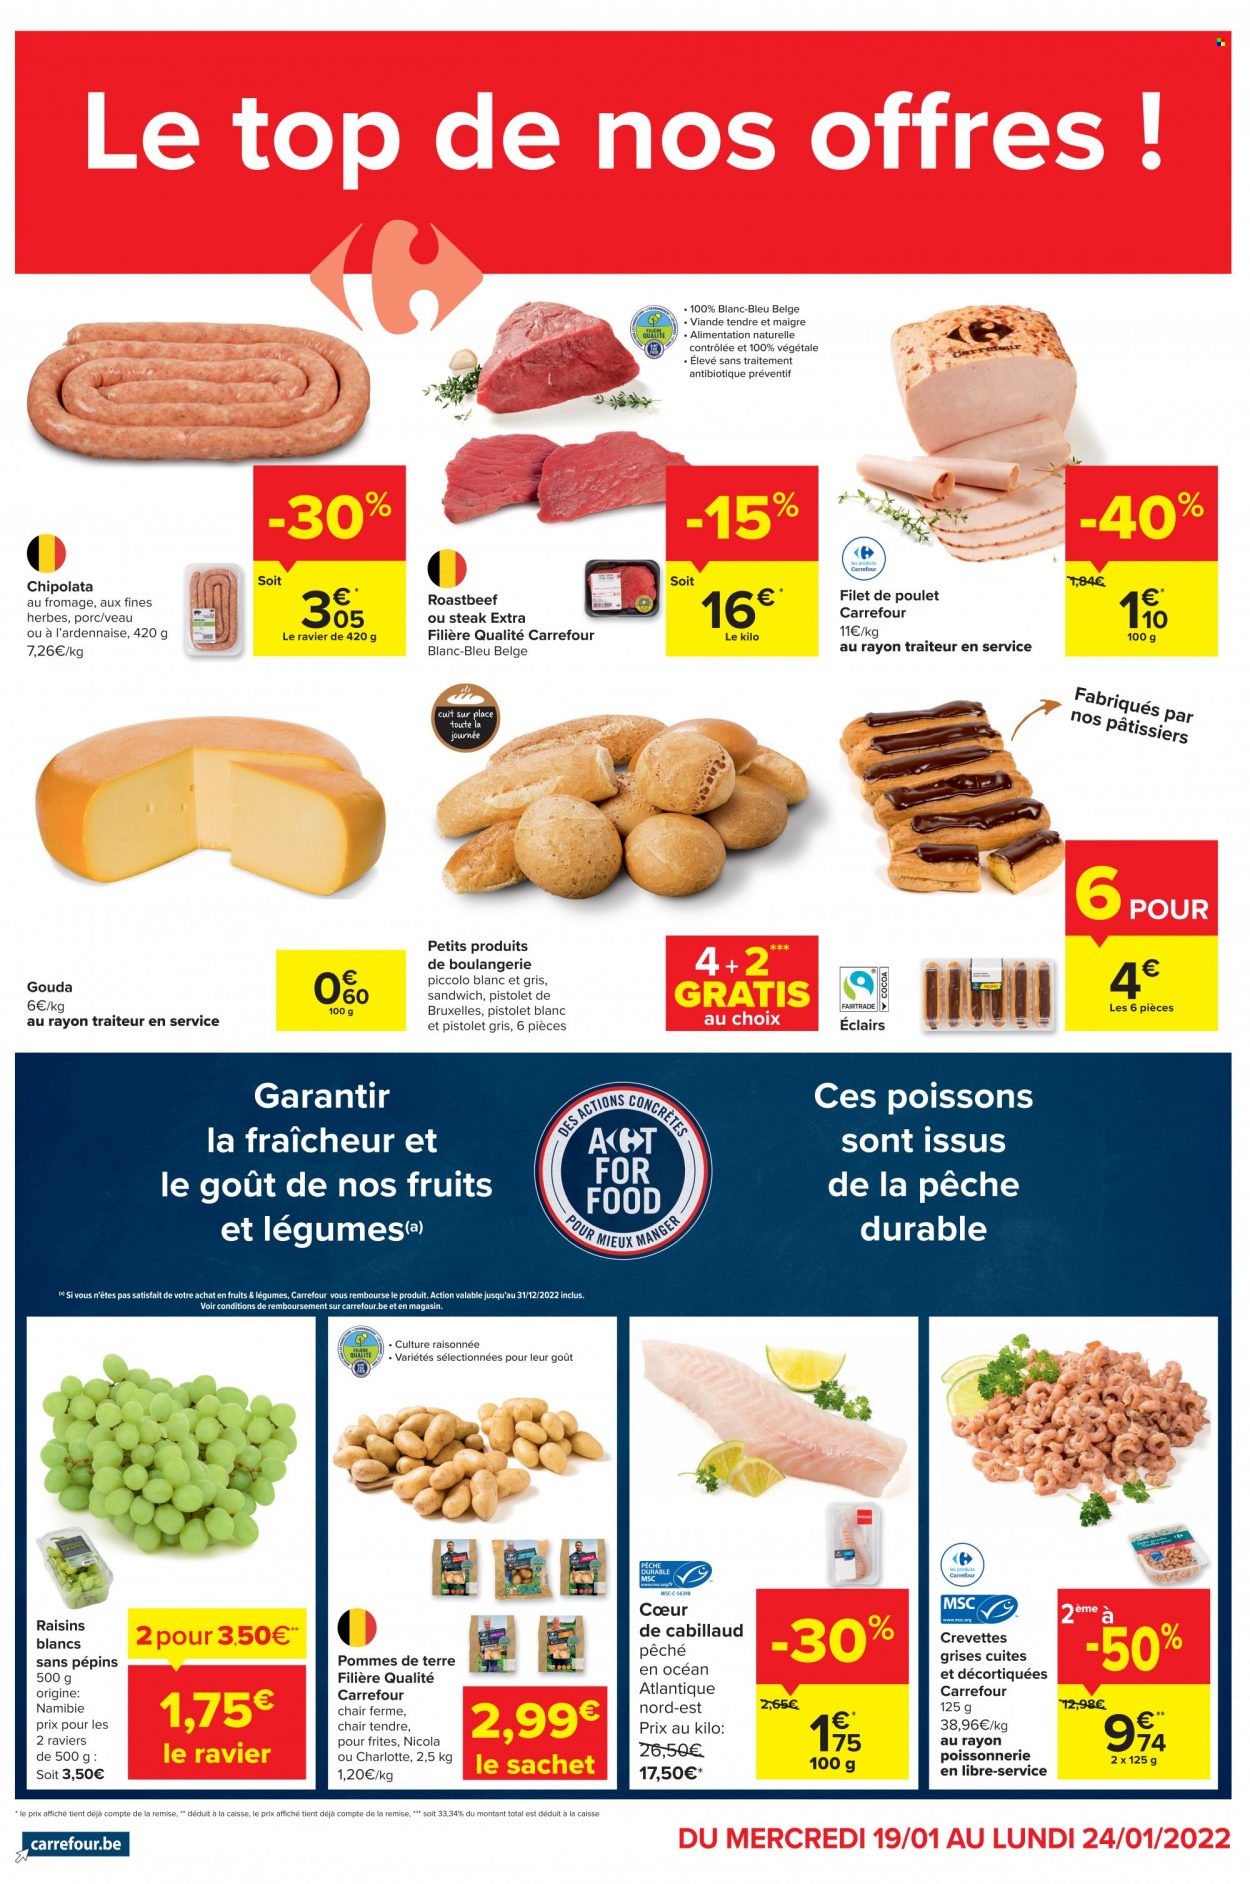 thumbnail - Carrefour-aanbieding - 19/01/2022 - 24/01/2022 -  producten in de aanbieding - steak, pistolet, éclairs, roastbeef, sandwich, chipolataworstjes, gouda, frites, top. Pagina 1.